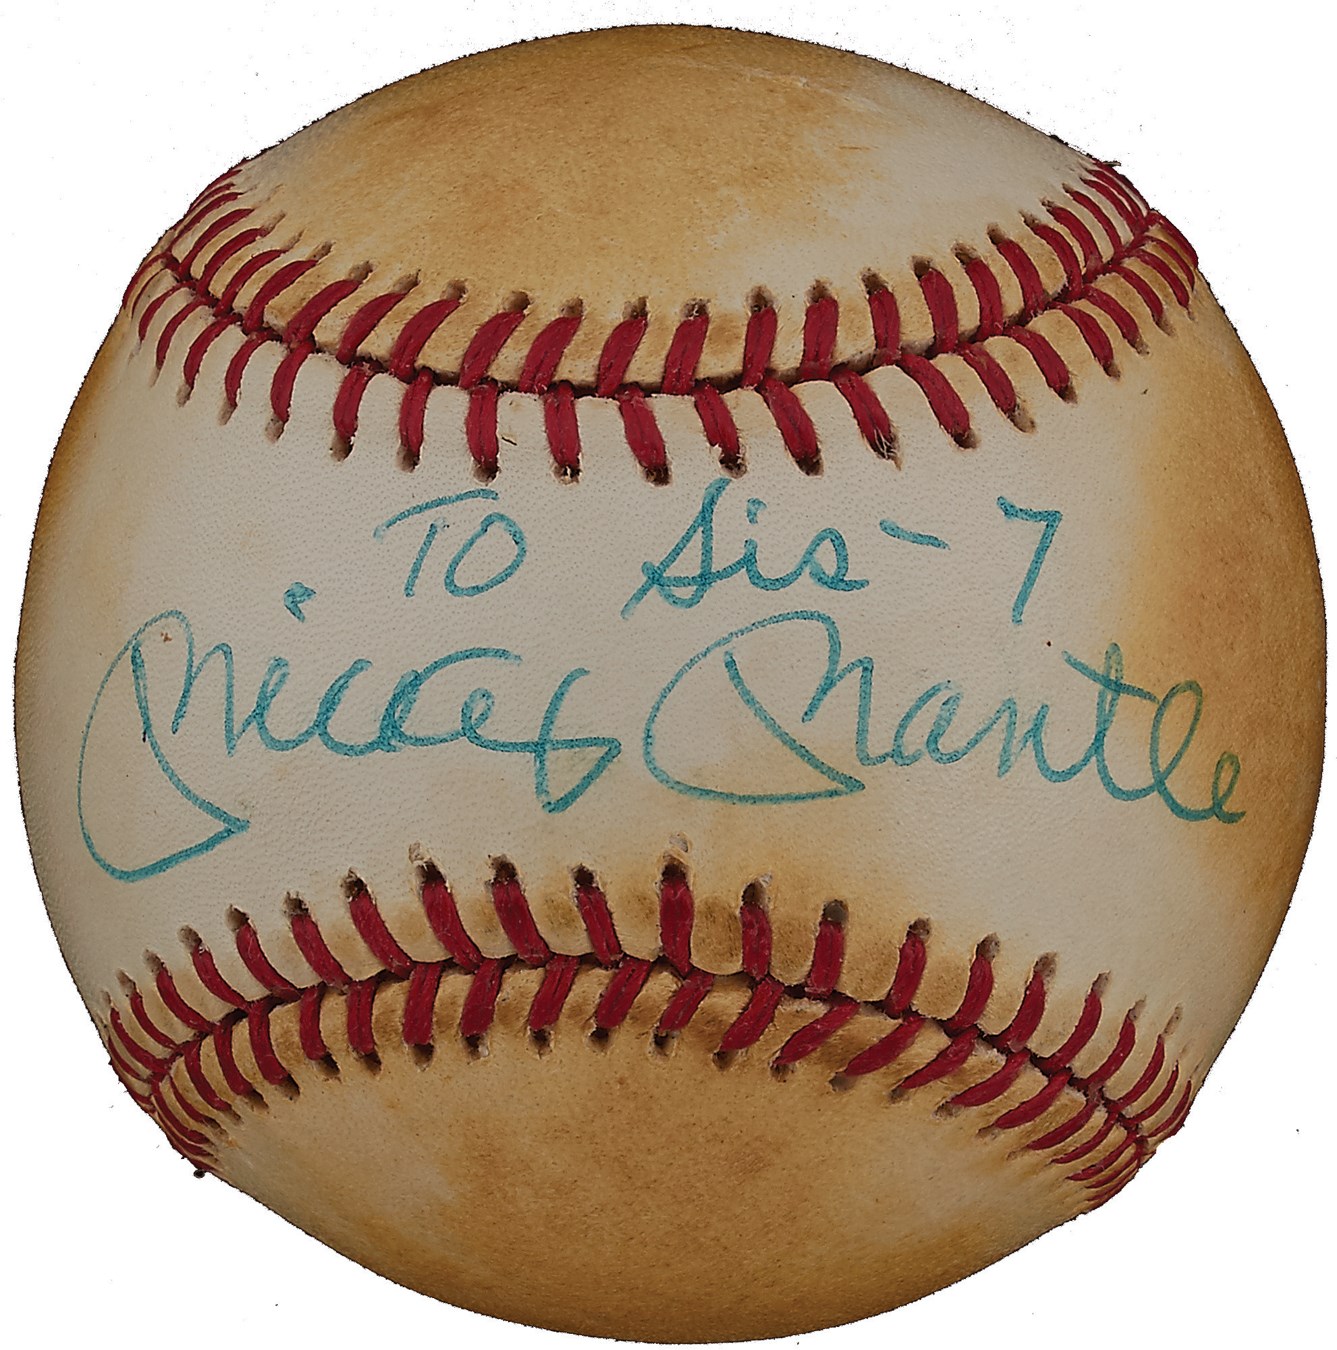 Mickey Mantle Signed Baseball to His Sister (JSA LOA)